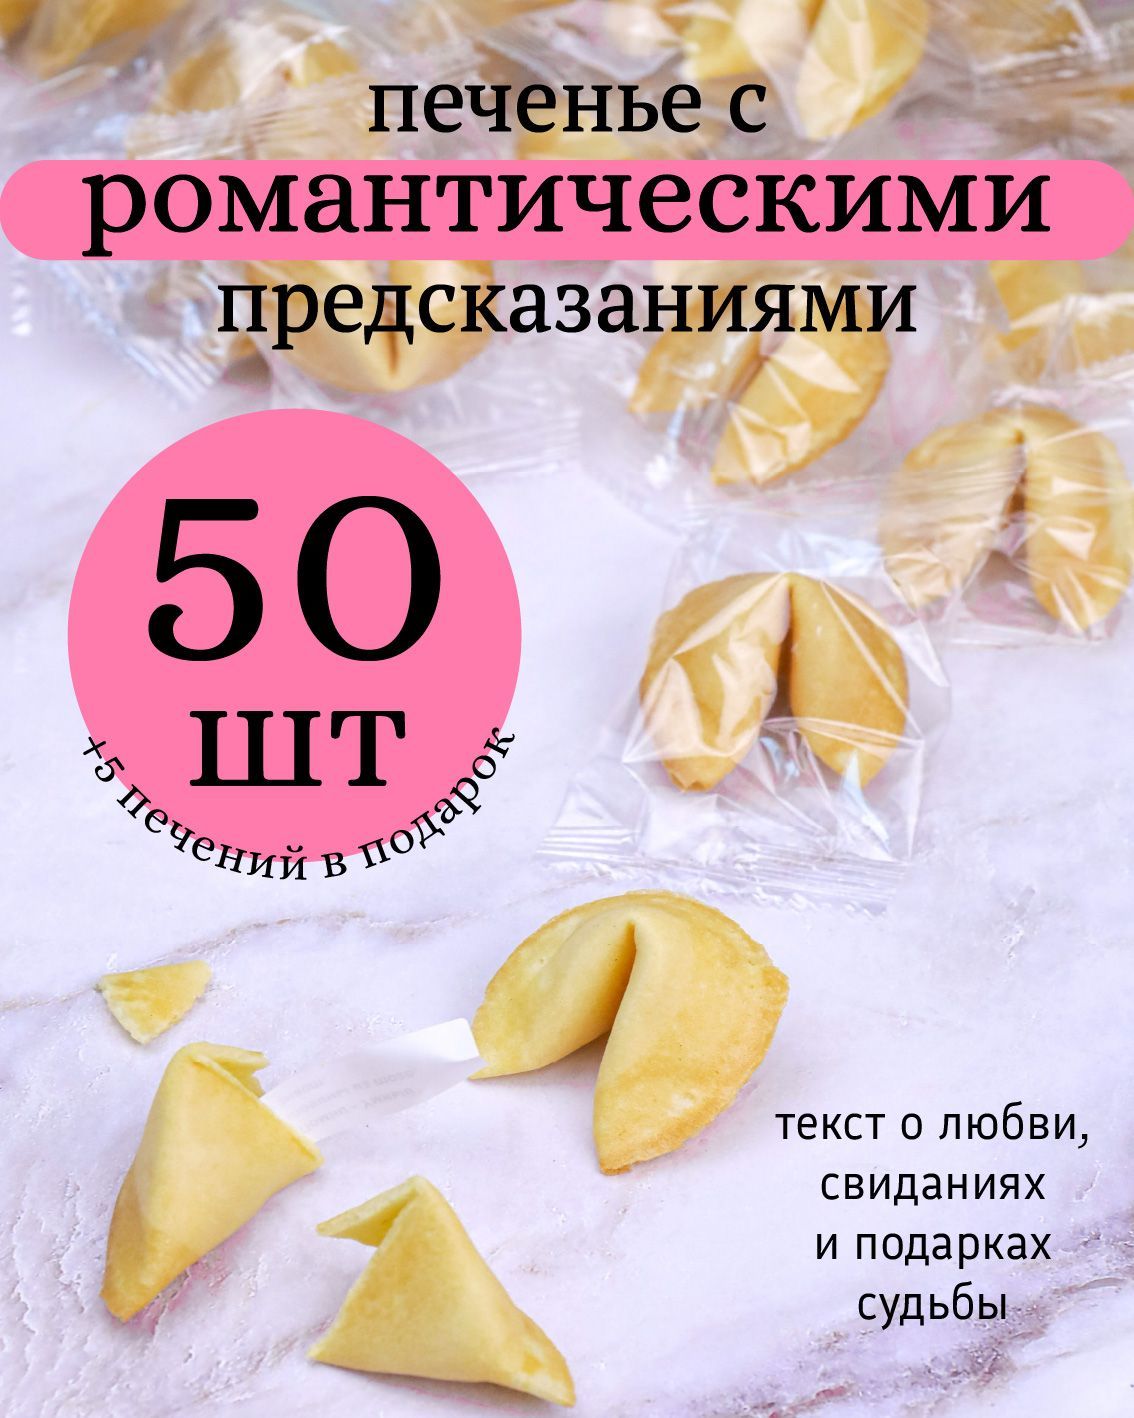 Печенье с предсказаниями, пошаговый рецепт с фото от автора Юлия Солнцева на ккал